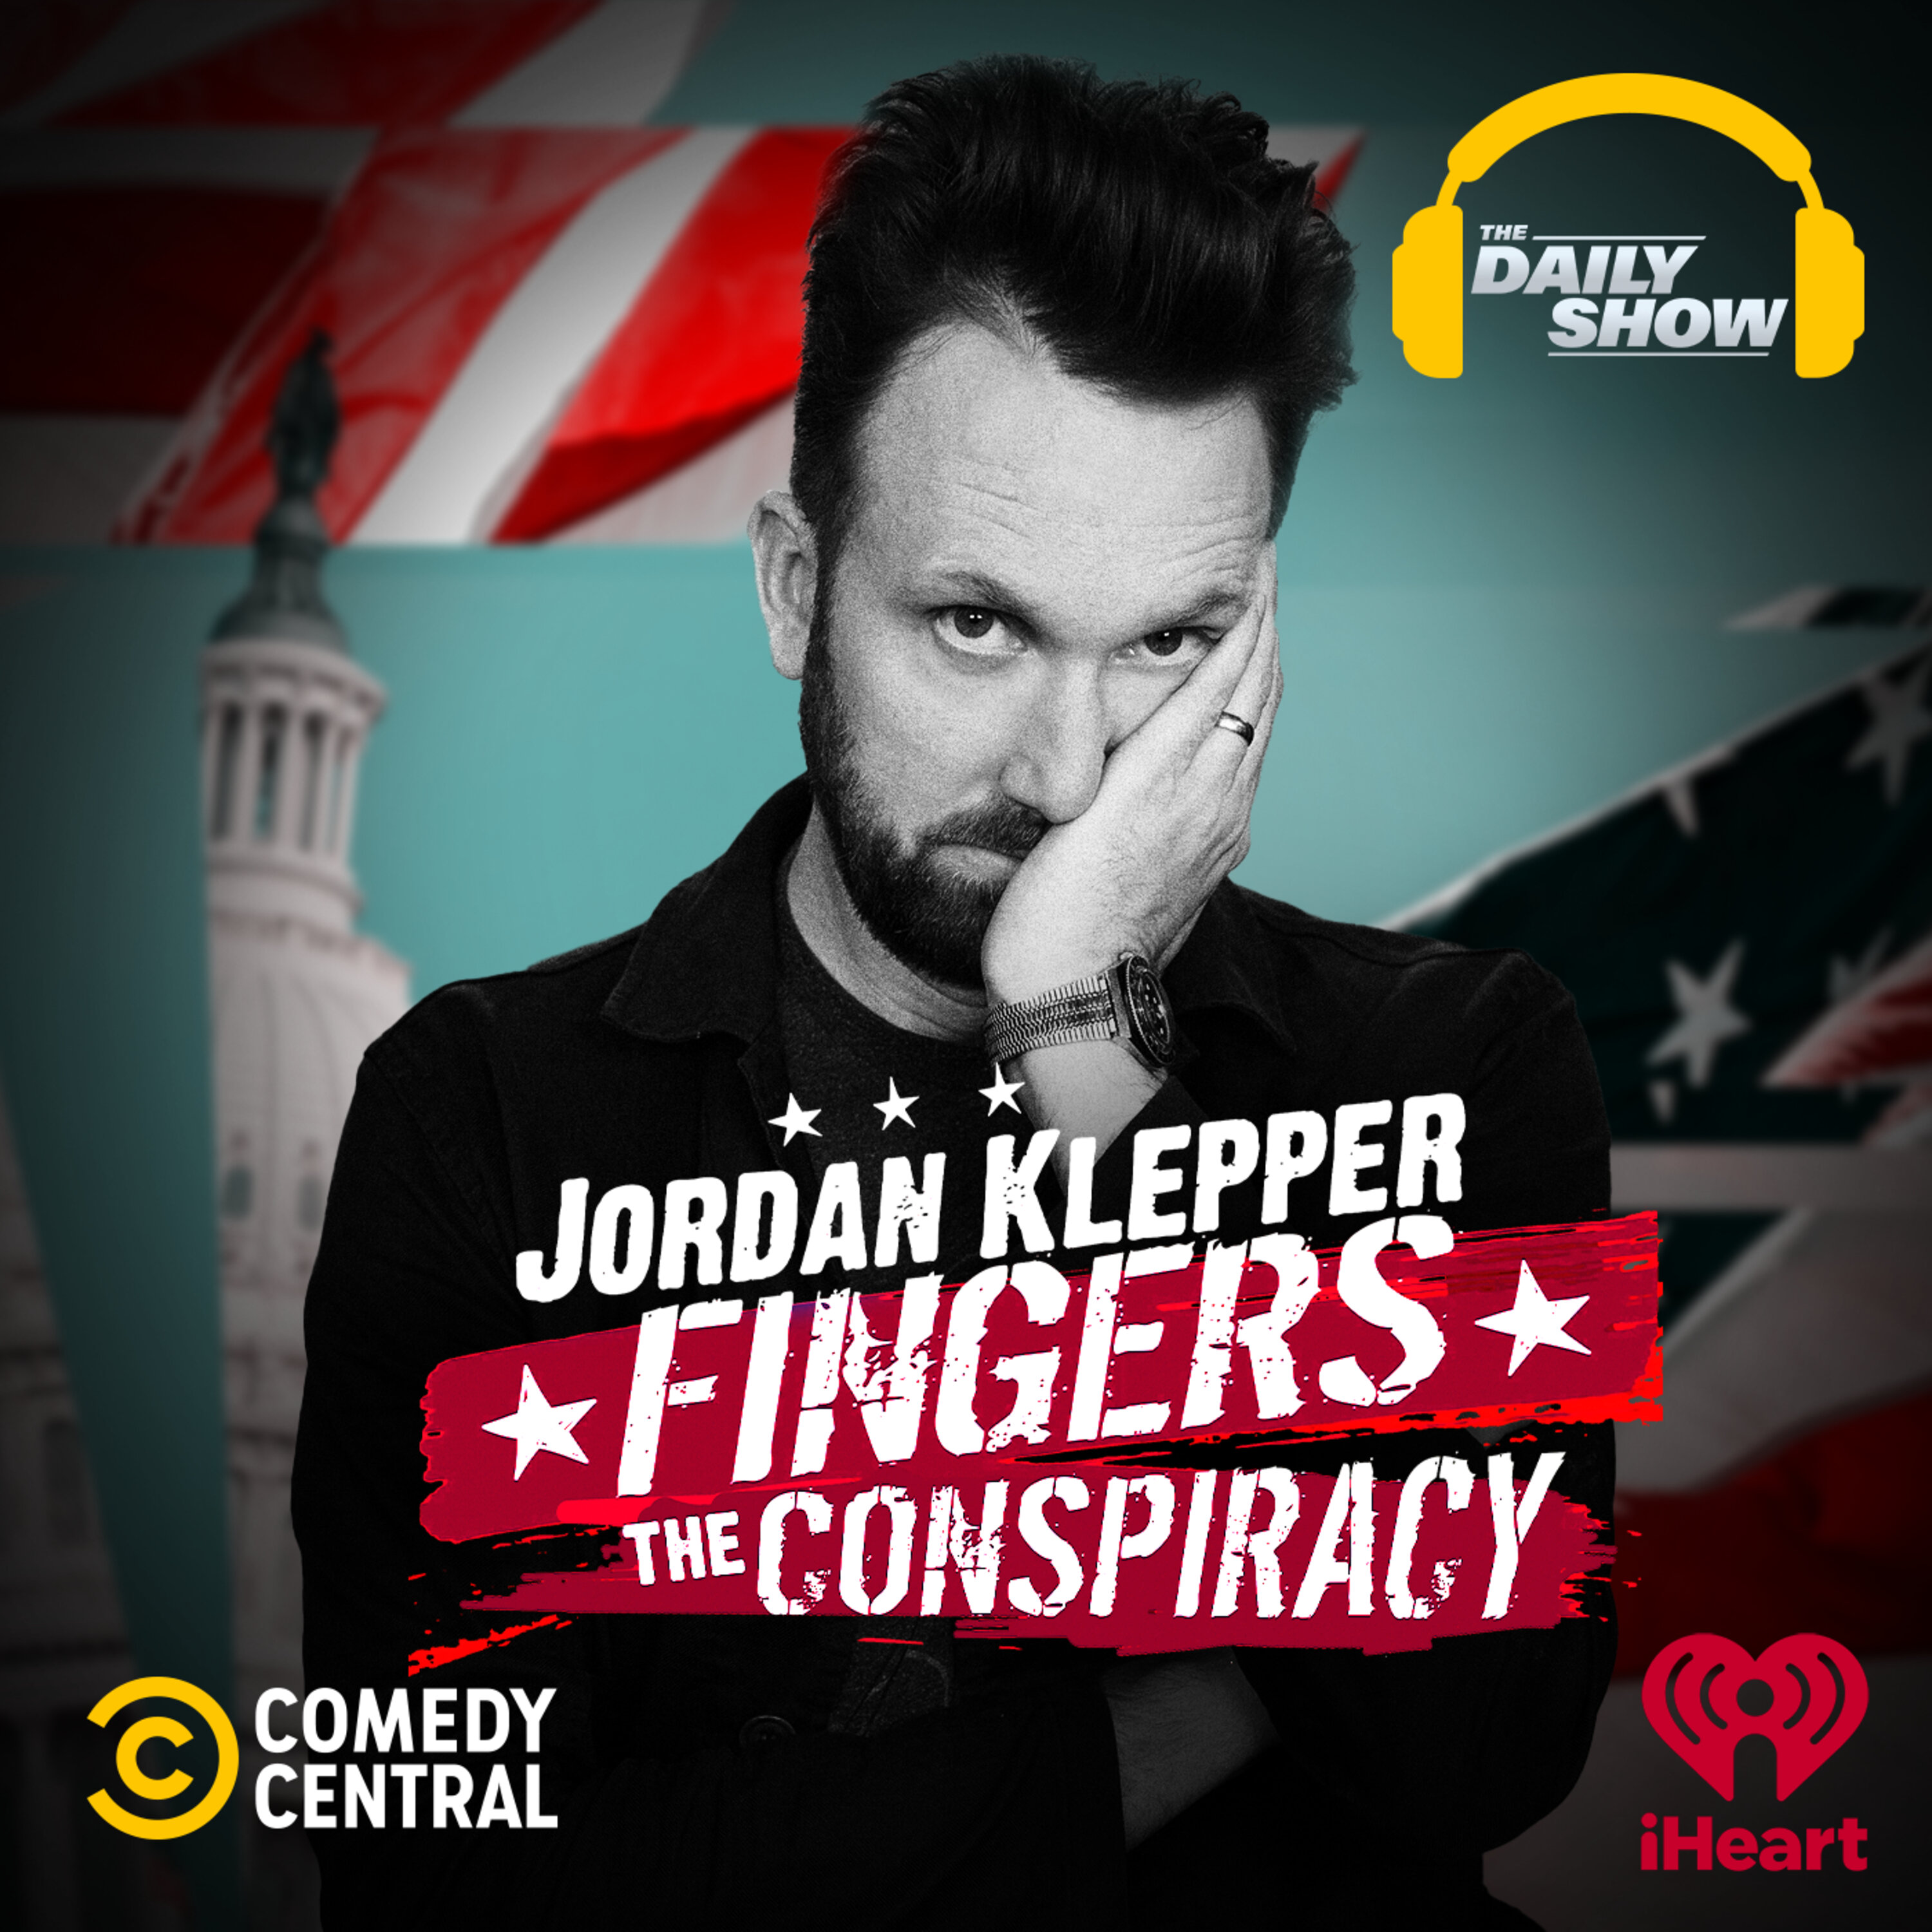 Jordan Klepper Fingers the Conspiracy podcast show image